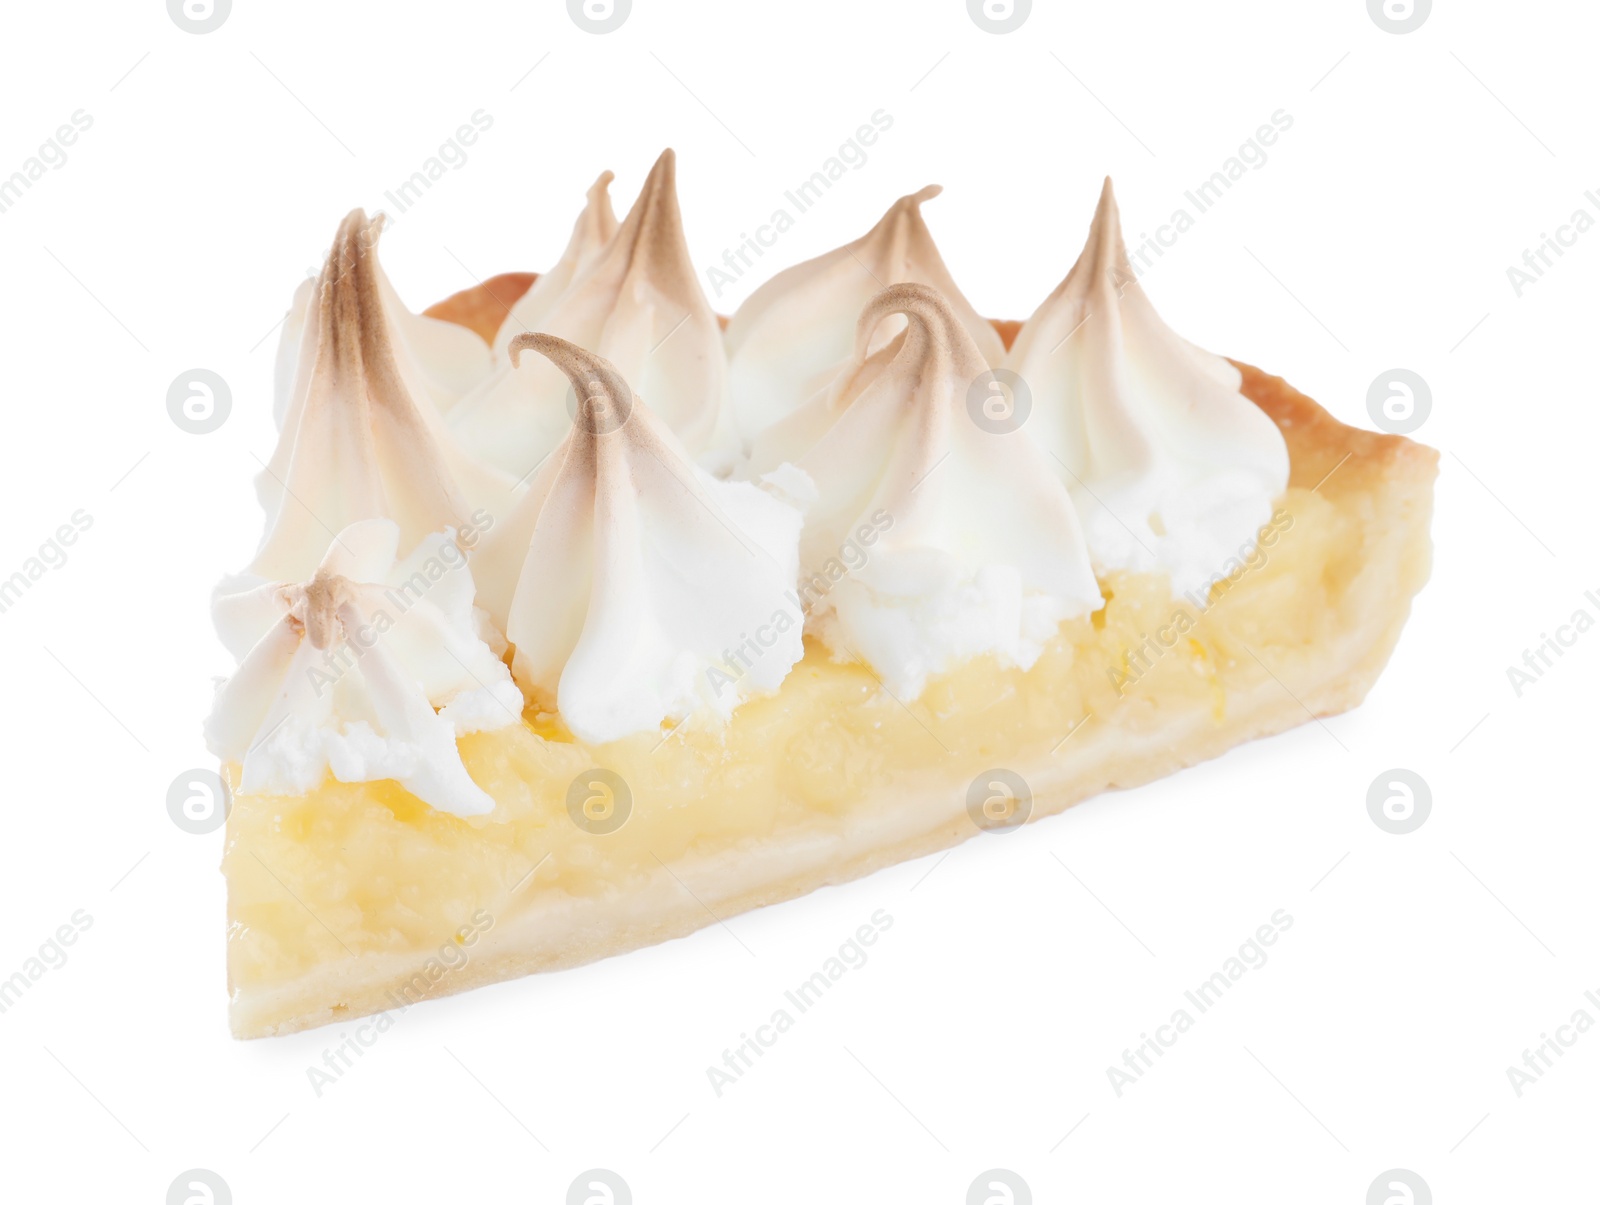 Photo of Piece of delicious lemon meringue pie isolated on white